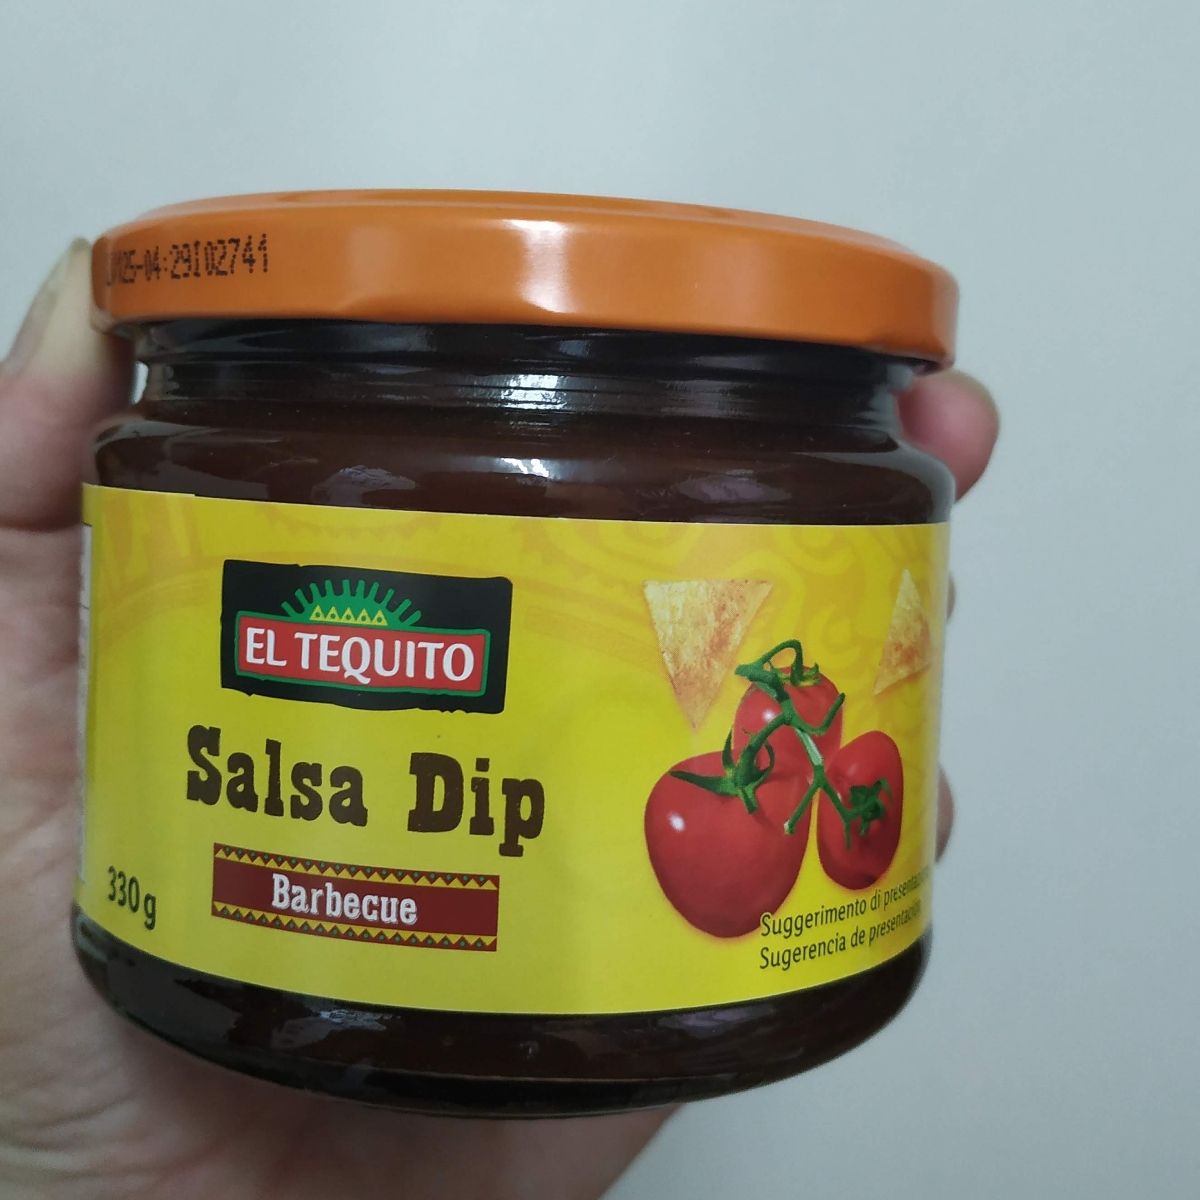 El Tequito Salsa Dip Barbecue Review | abillion